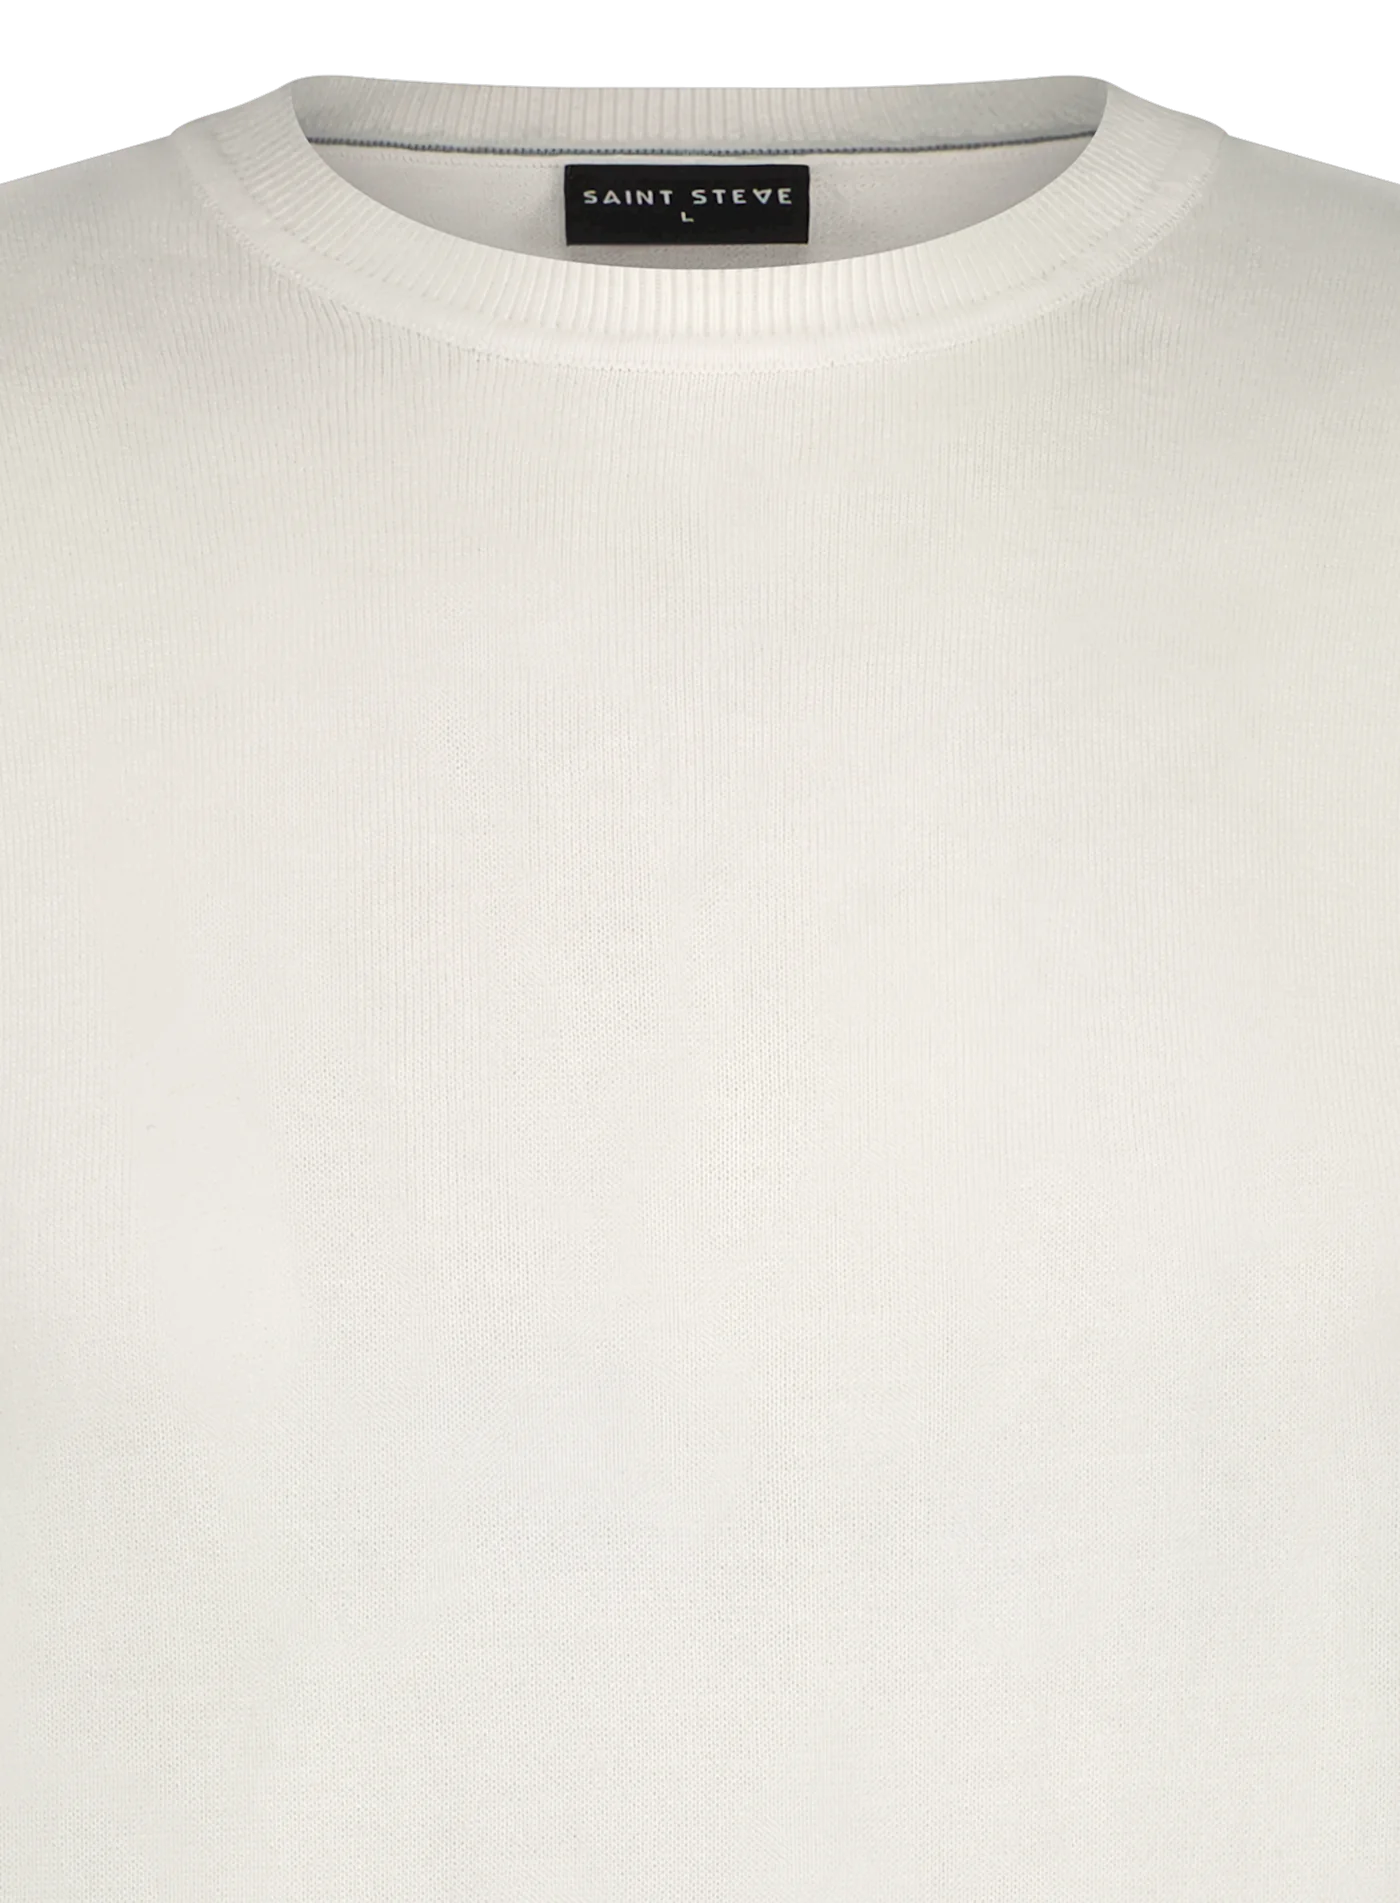 Saint Steve BOUDEWIJN - WHITE t-shirt trui